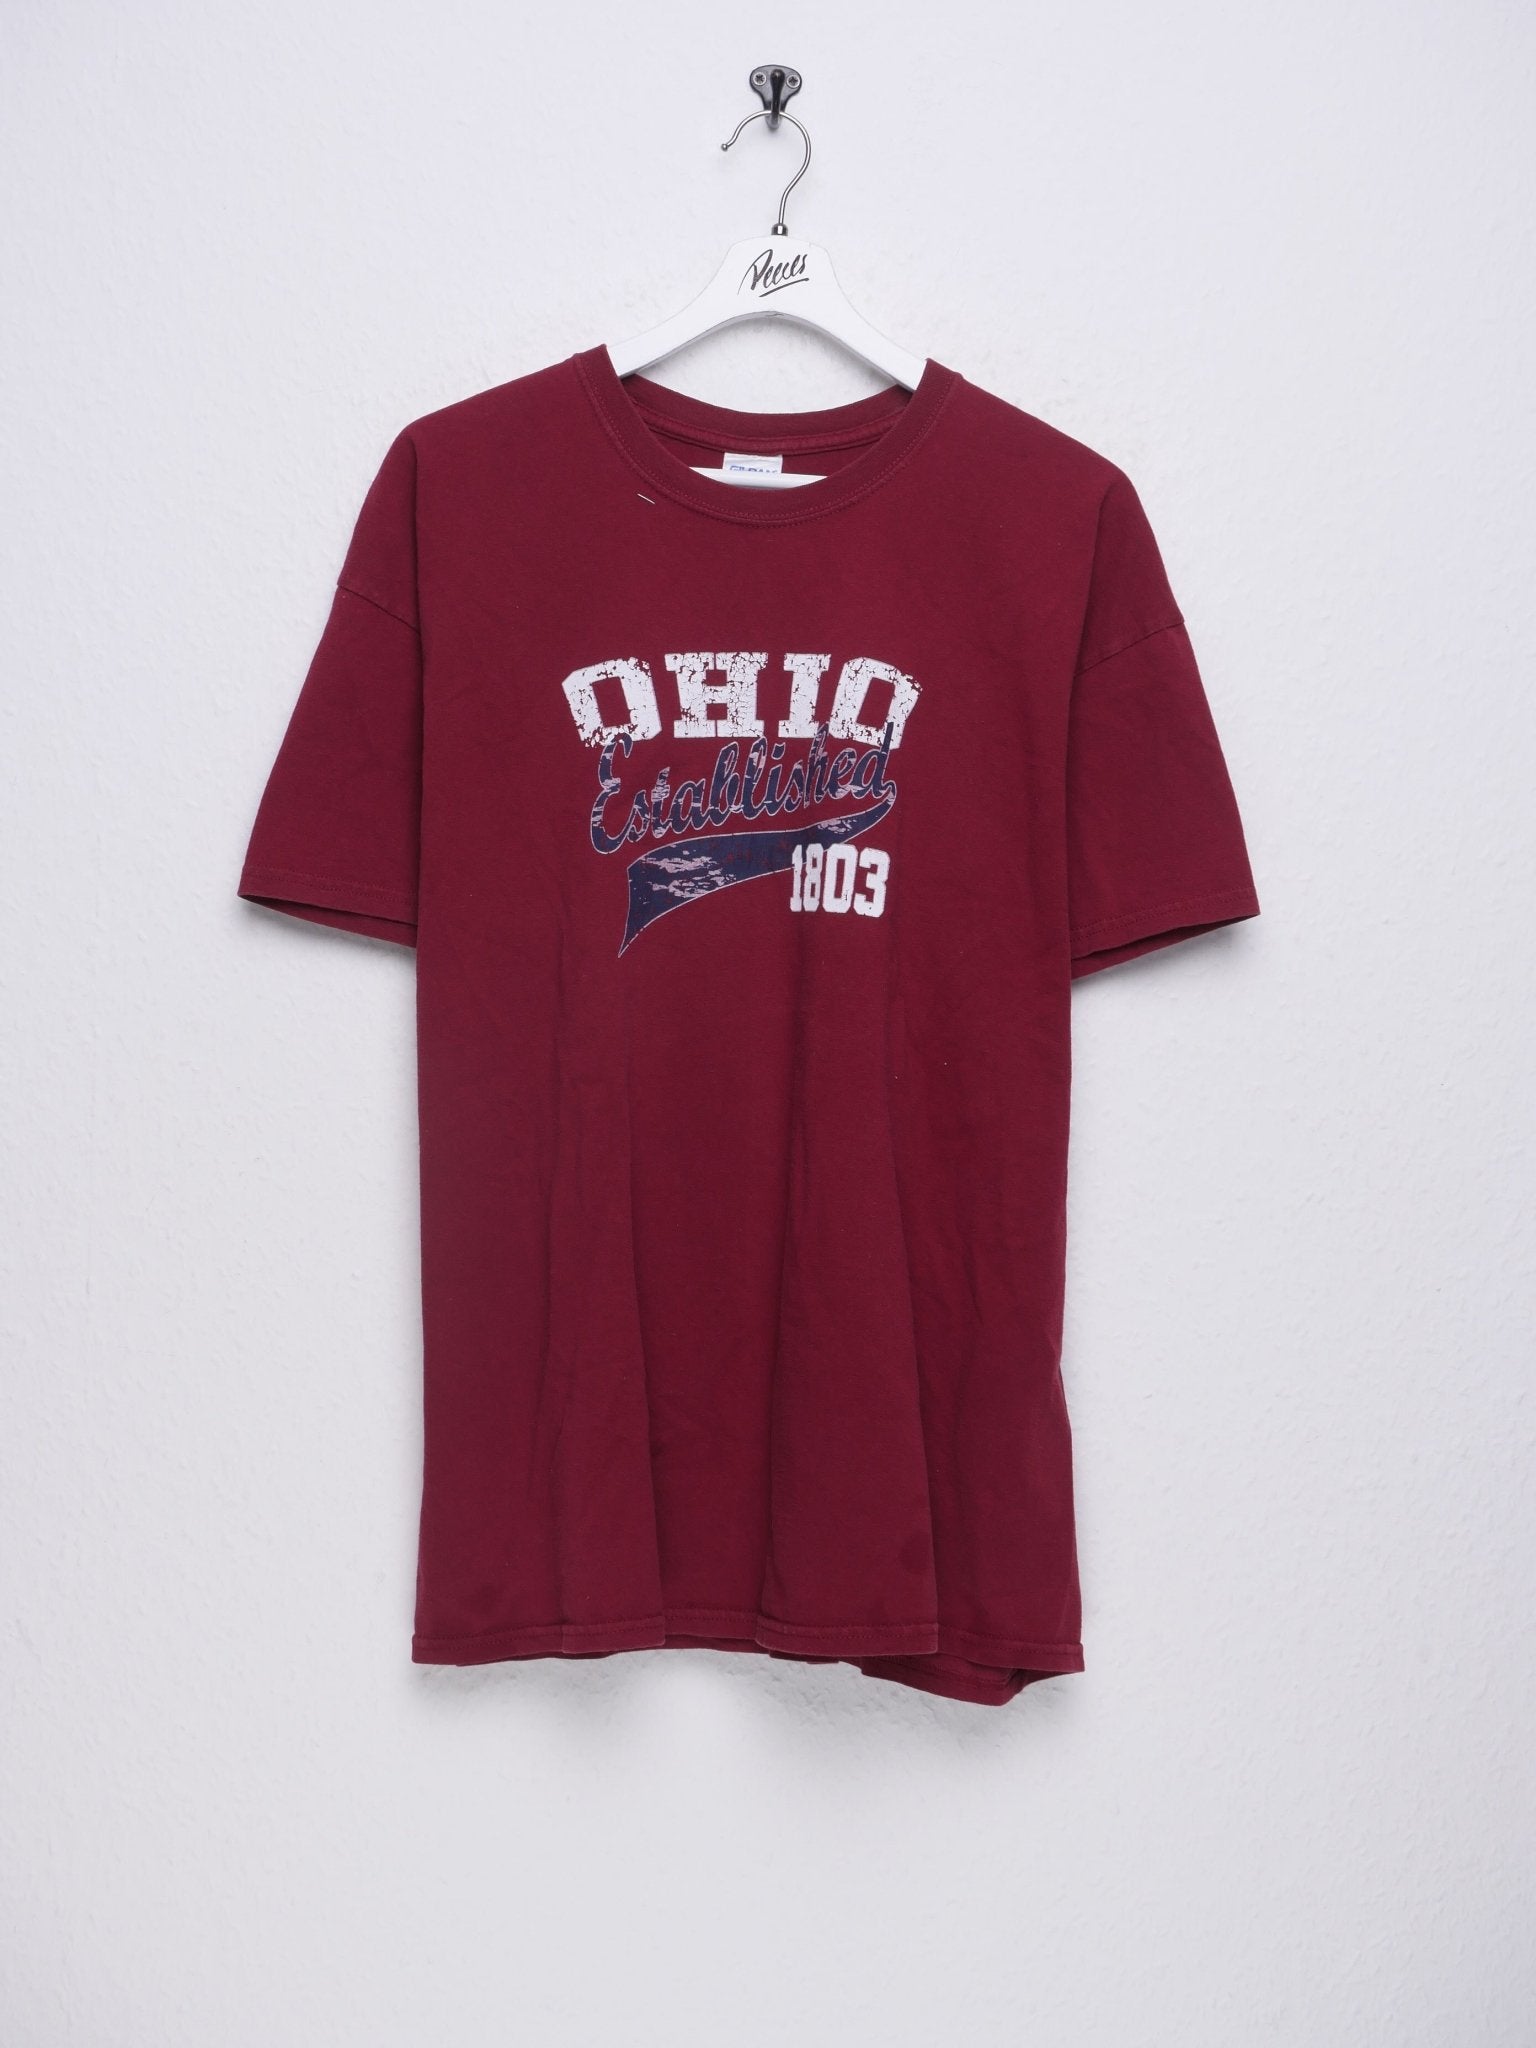 Ohio Spellout Vintage Shirt - Peeces